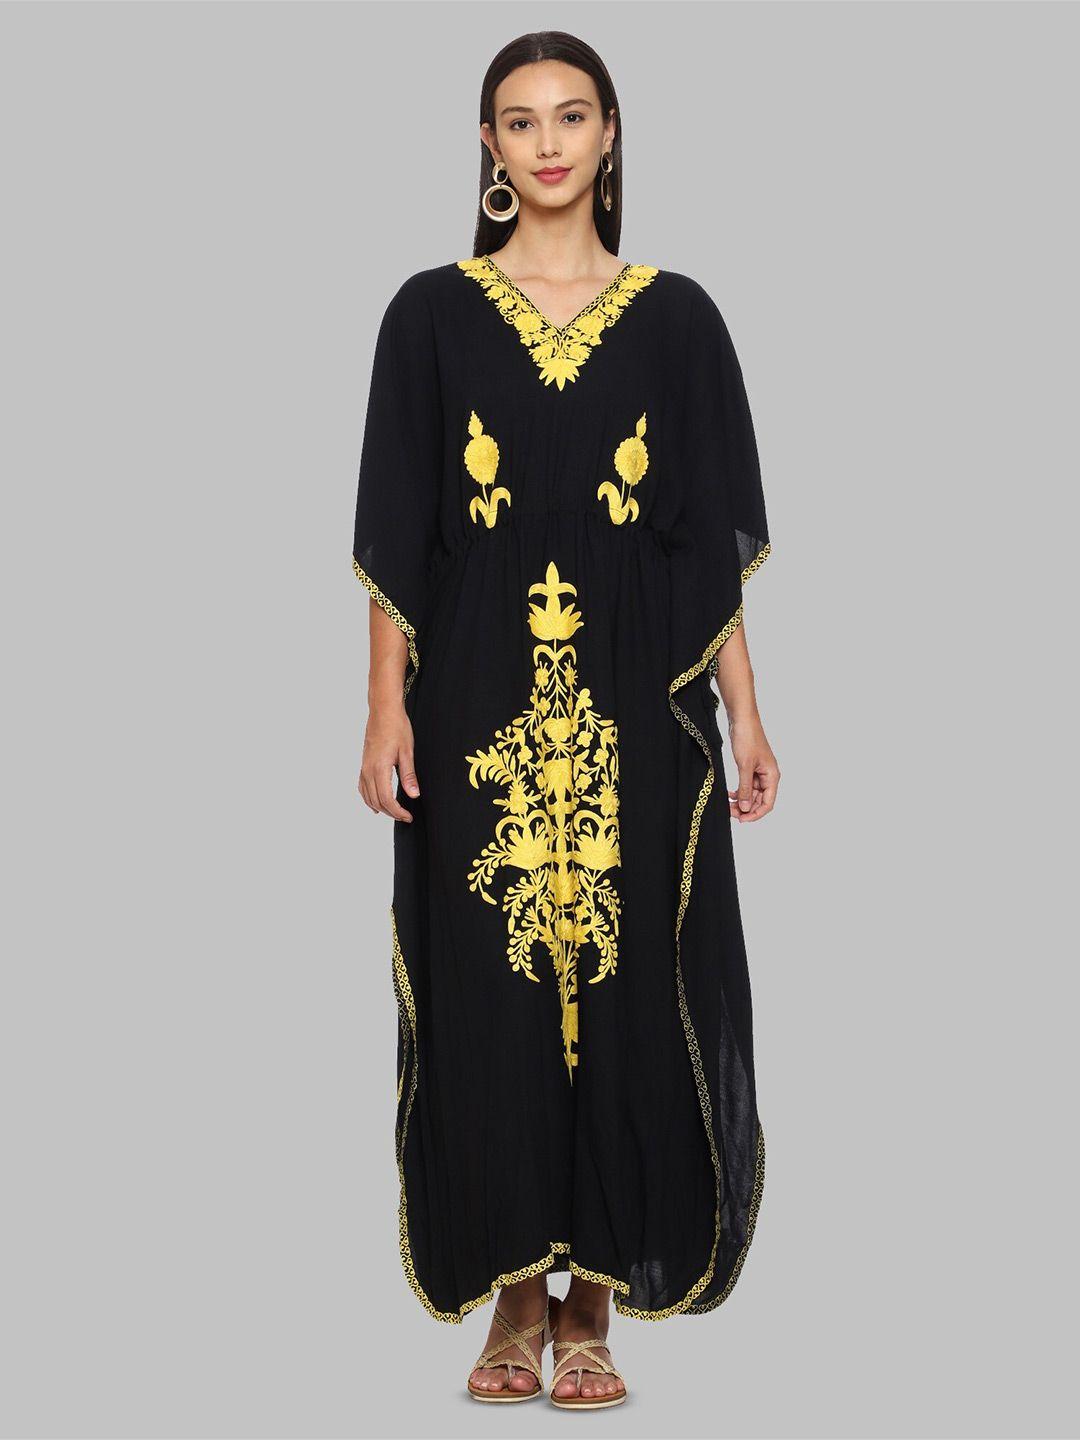 craftbazar black & yellow embroidered cape sleeve kaftan maxi dress